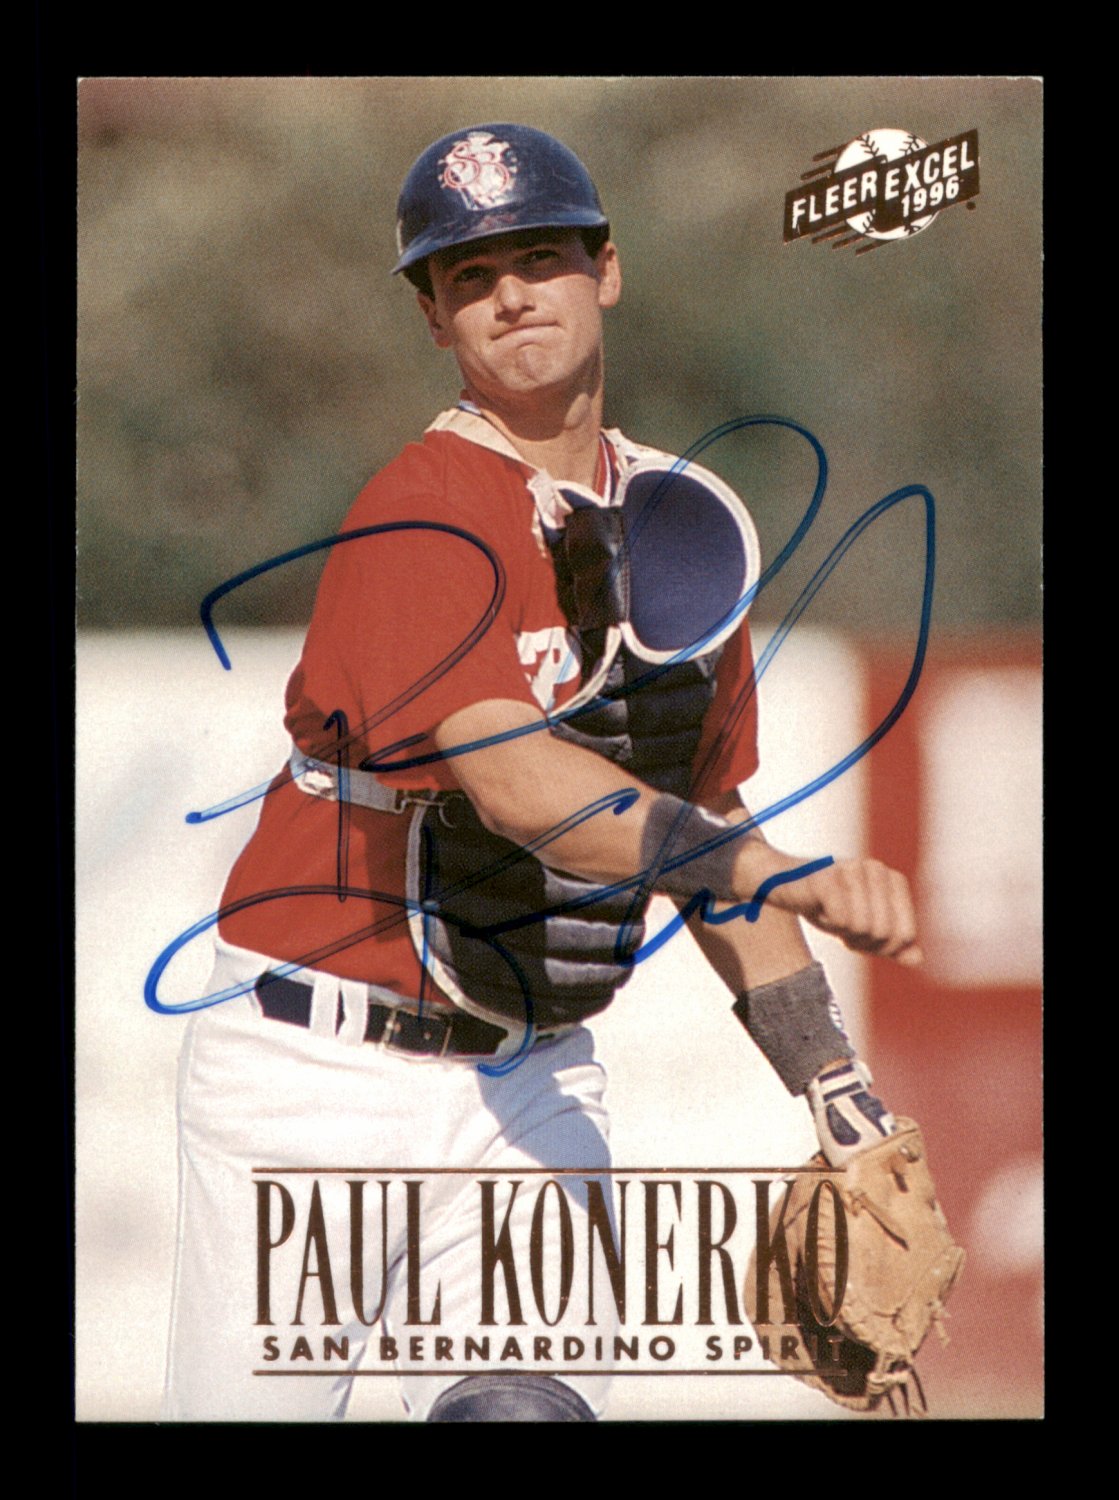 Paul Konerko Autographed Memorabilia  Signed Photo, Jersey, Collectibles &  Merchandise